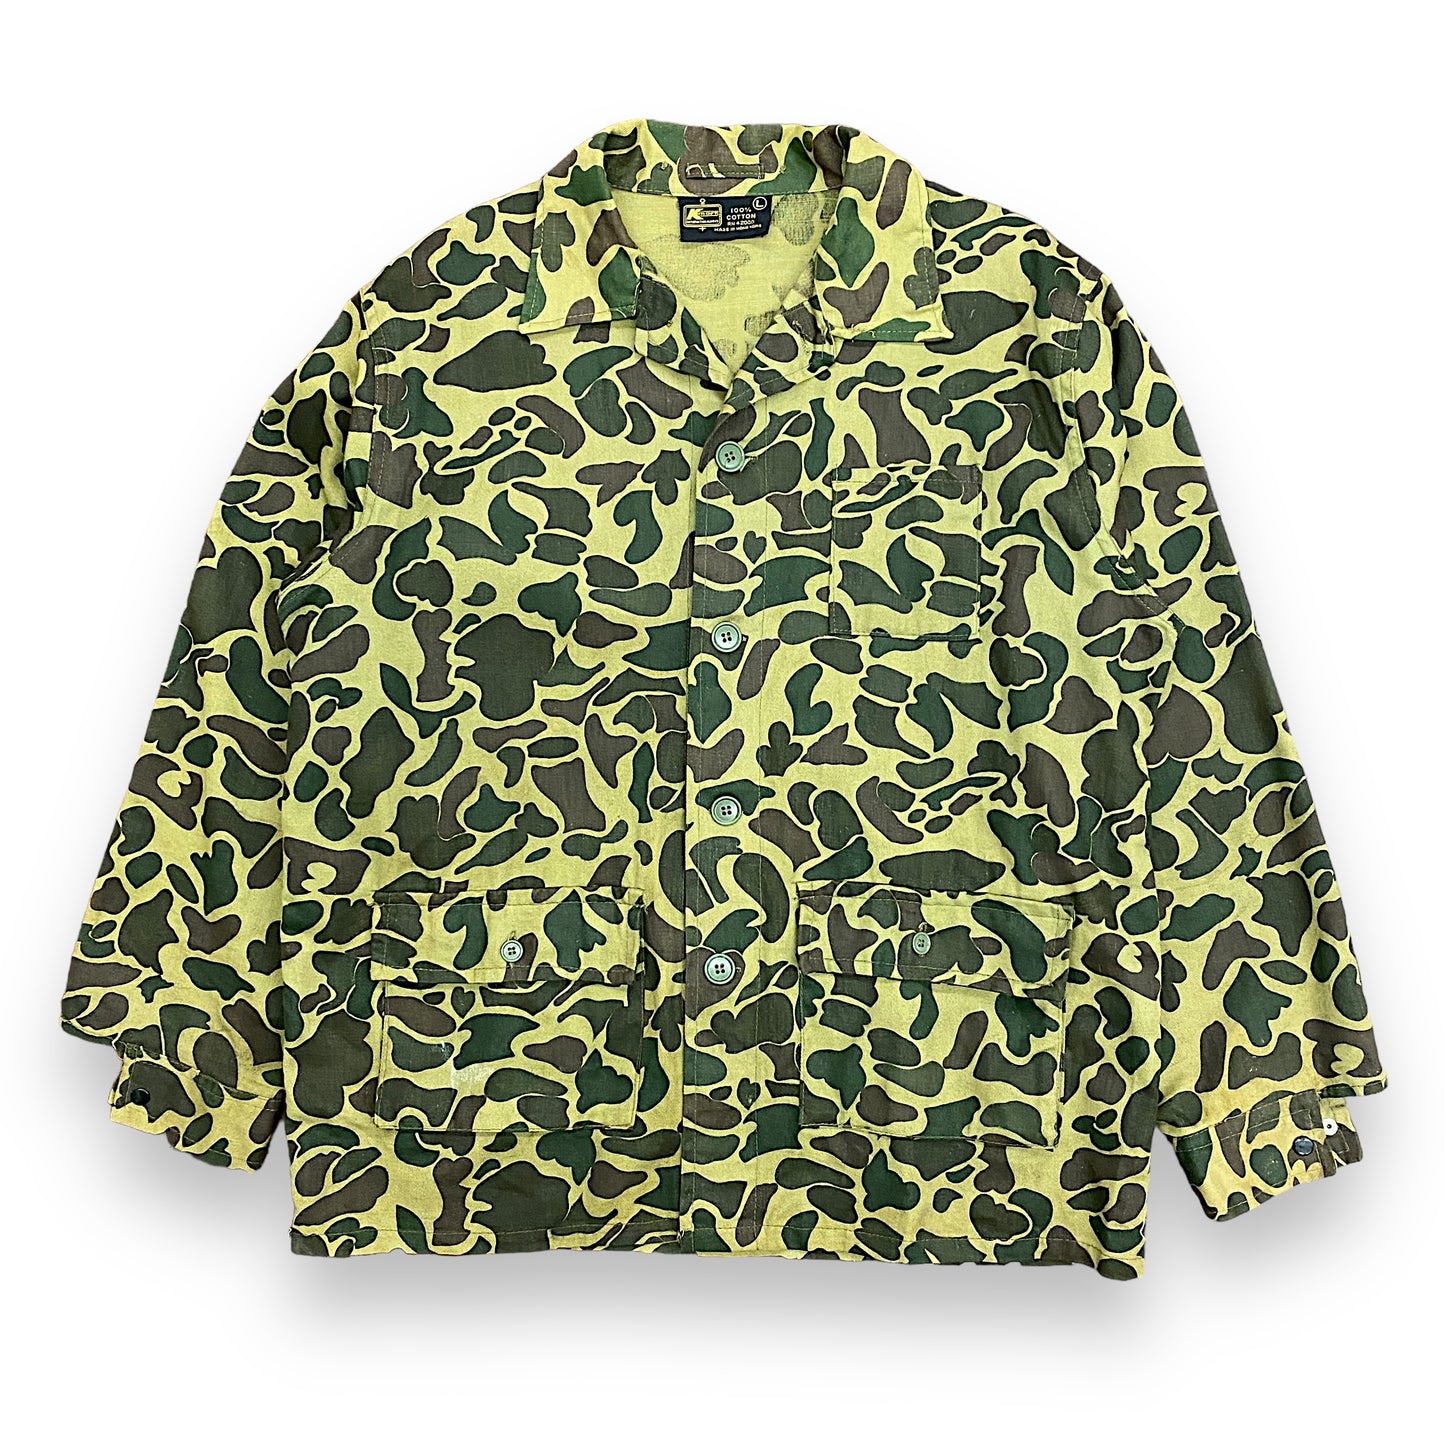 1980s K-Mart Duck Camouflage 100% Cotton Chore Shirt - Size Large